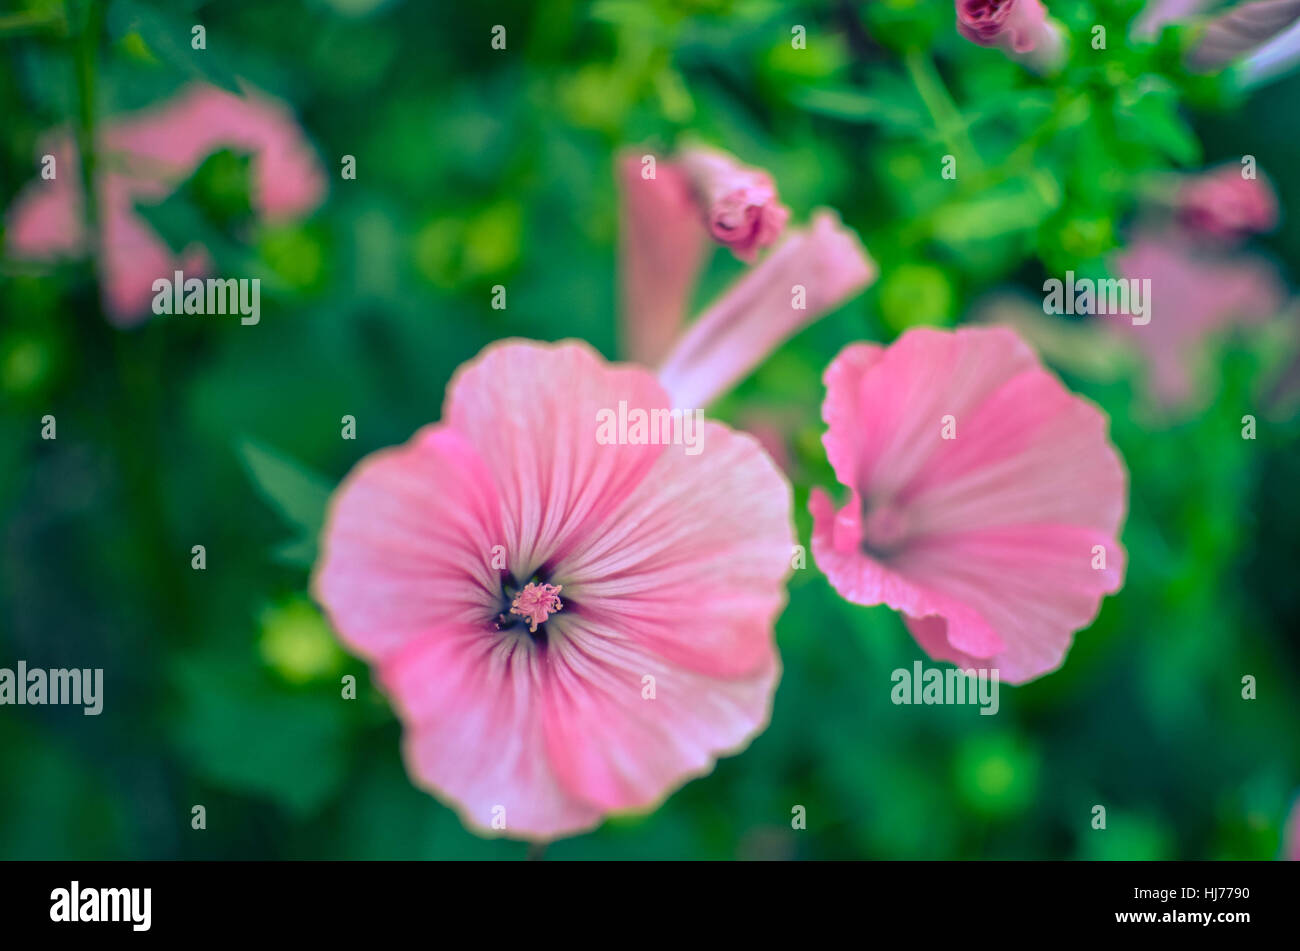 big beautiful pink flowers of Lavatera closeup on the blurry background. Stock Photo